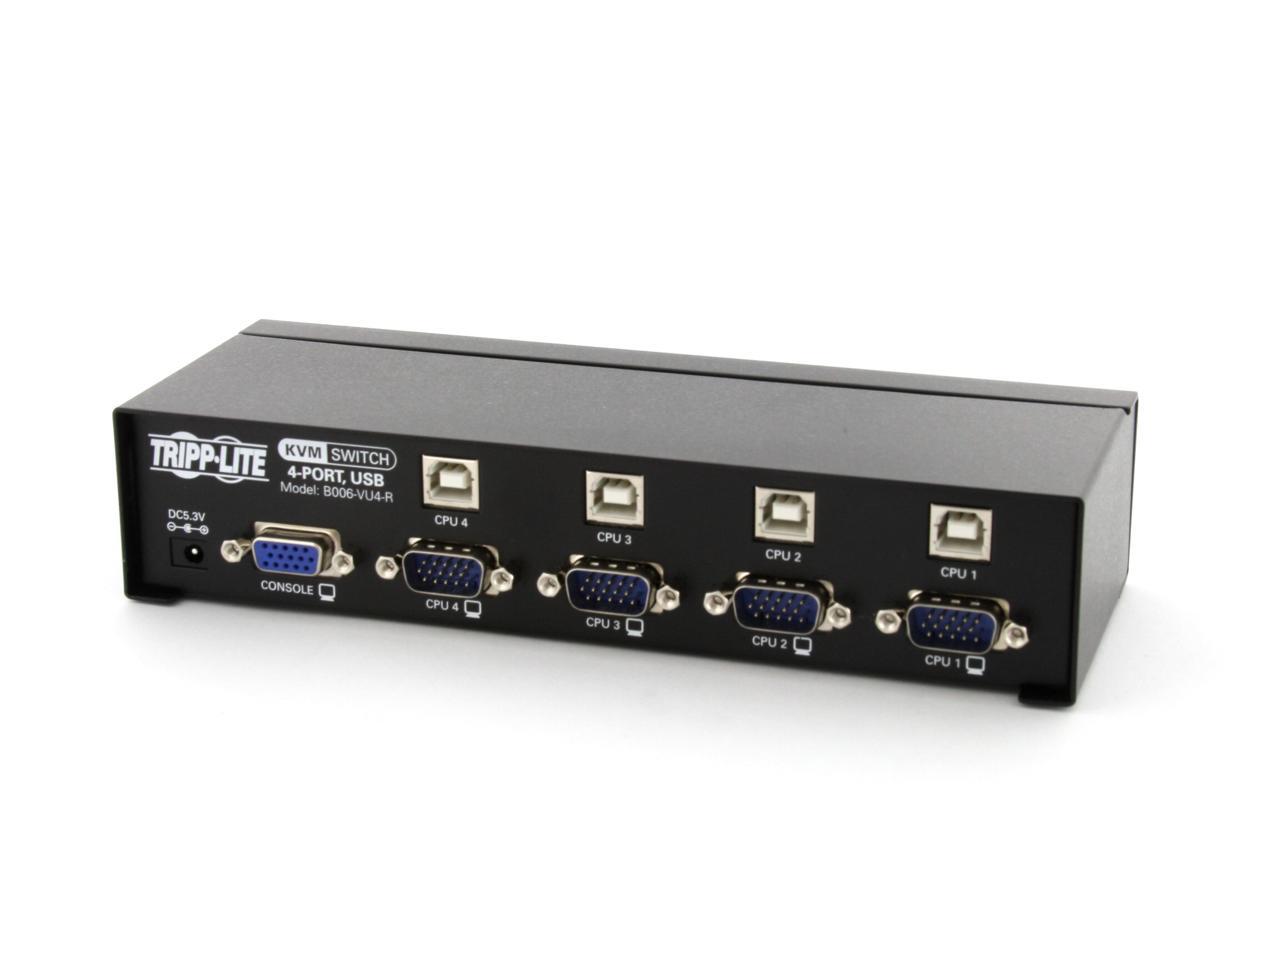 TRIPP LITE B006-VU4-R 4PORT USB DESKTOP KVM SWITCH 